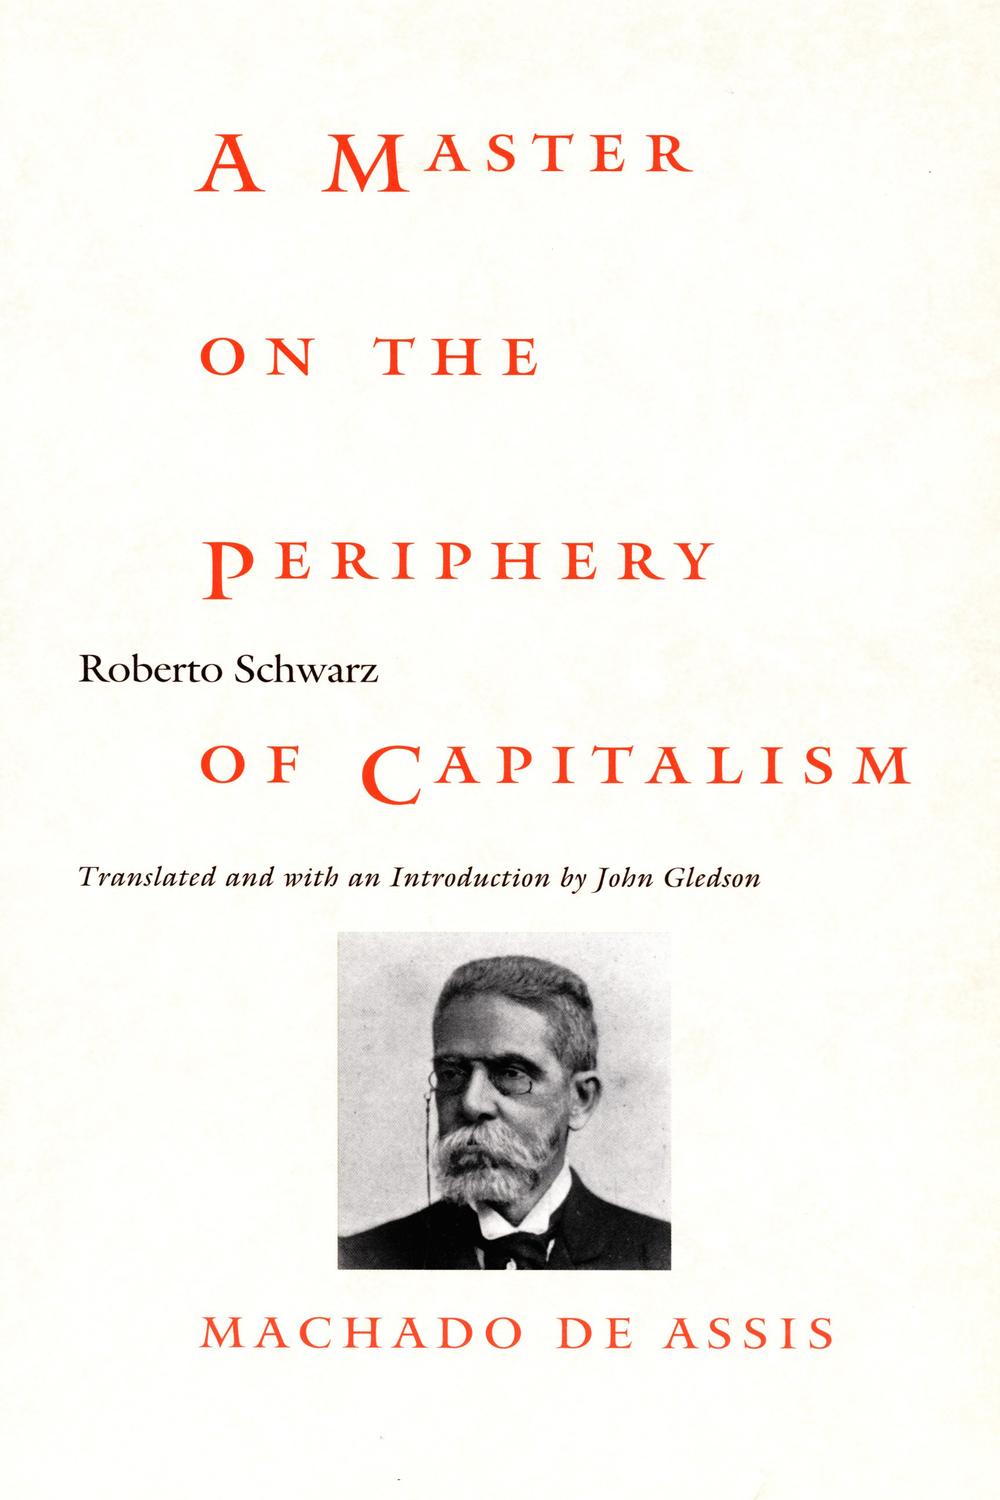 A Master on the Periphery of Capitalism - Roberto Schwarz, John Gledson, Stanley Fish, Fredric Jameson